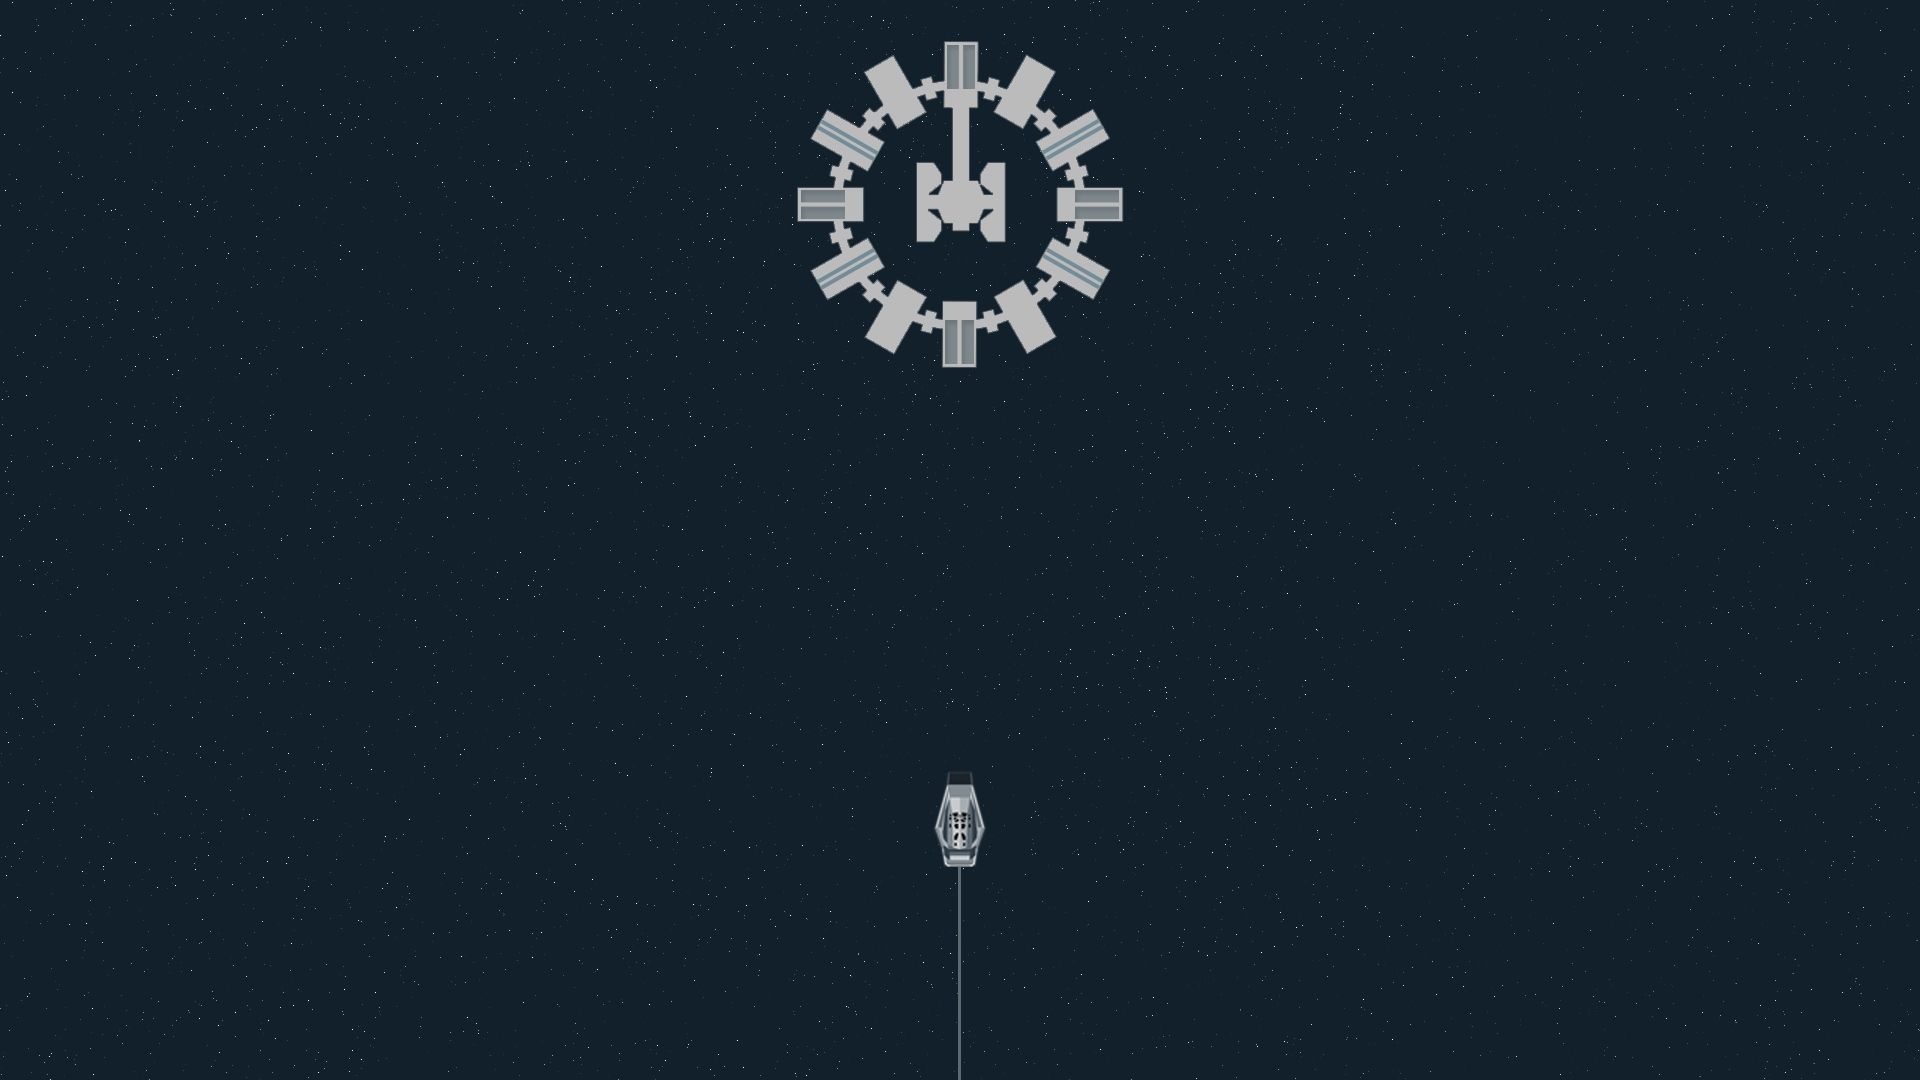 Interstellar: Endurance, Space ship, Minimalism. 1920x1080 Full HD Wallpaper.